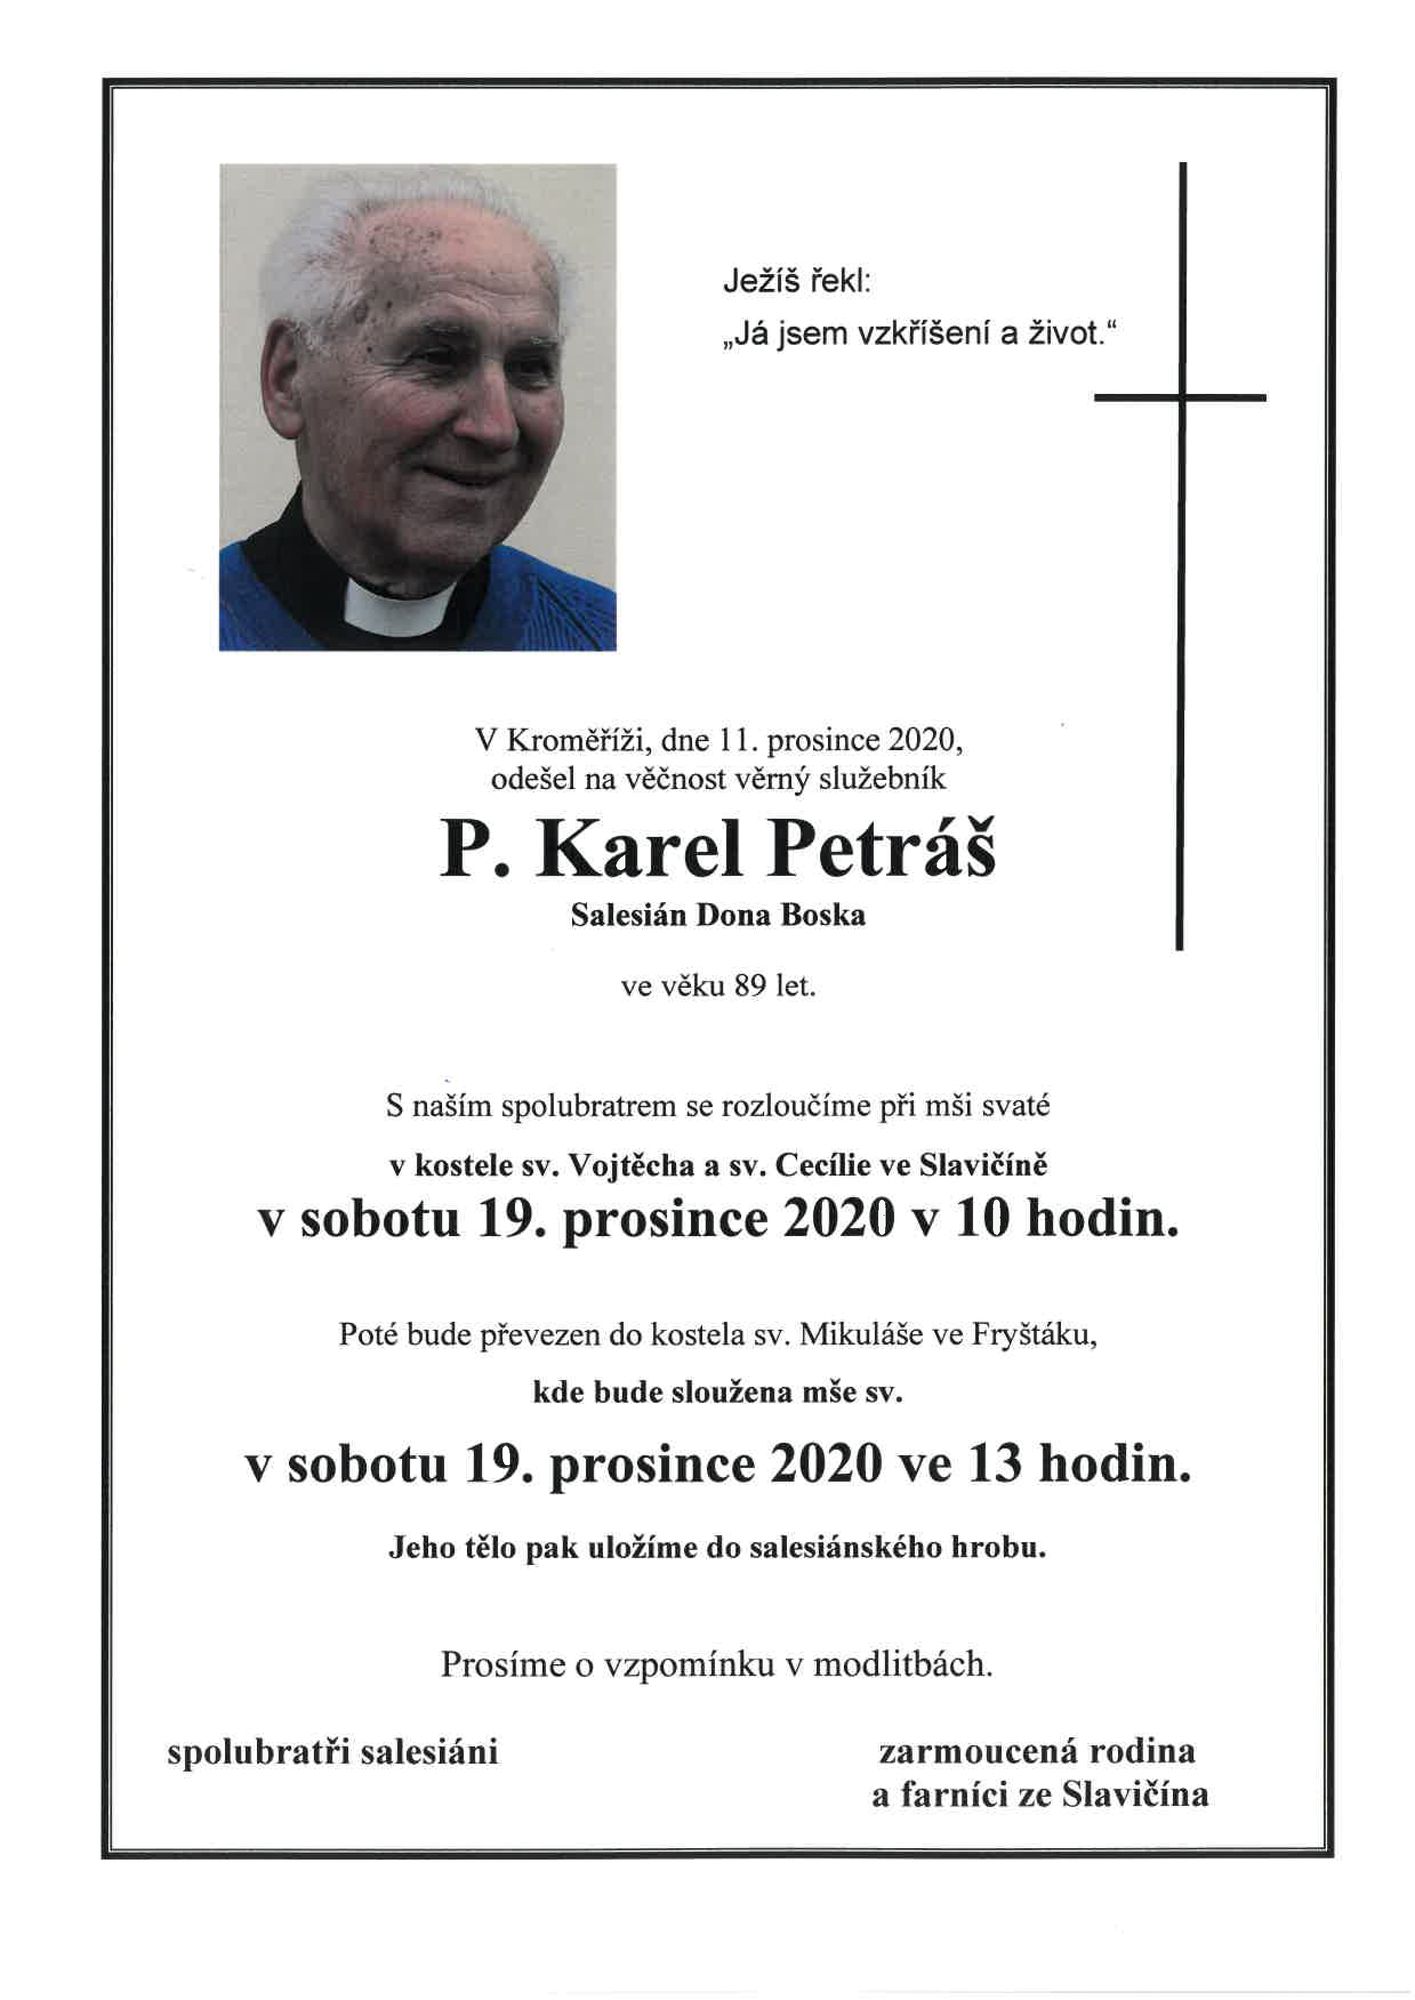 P. Karel Petráš